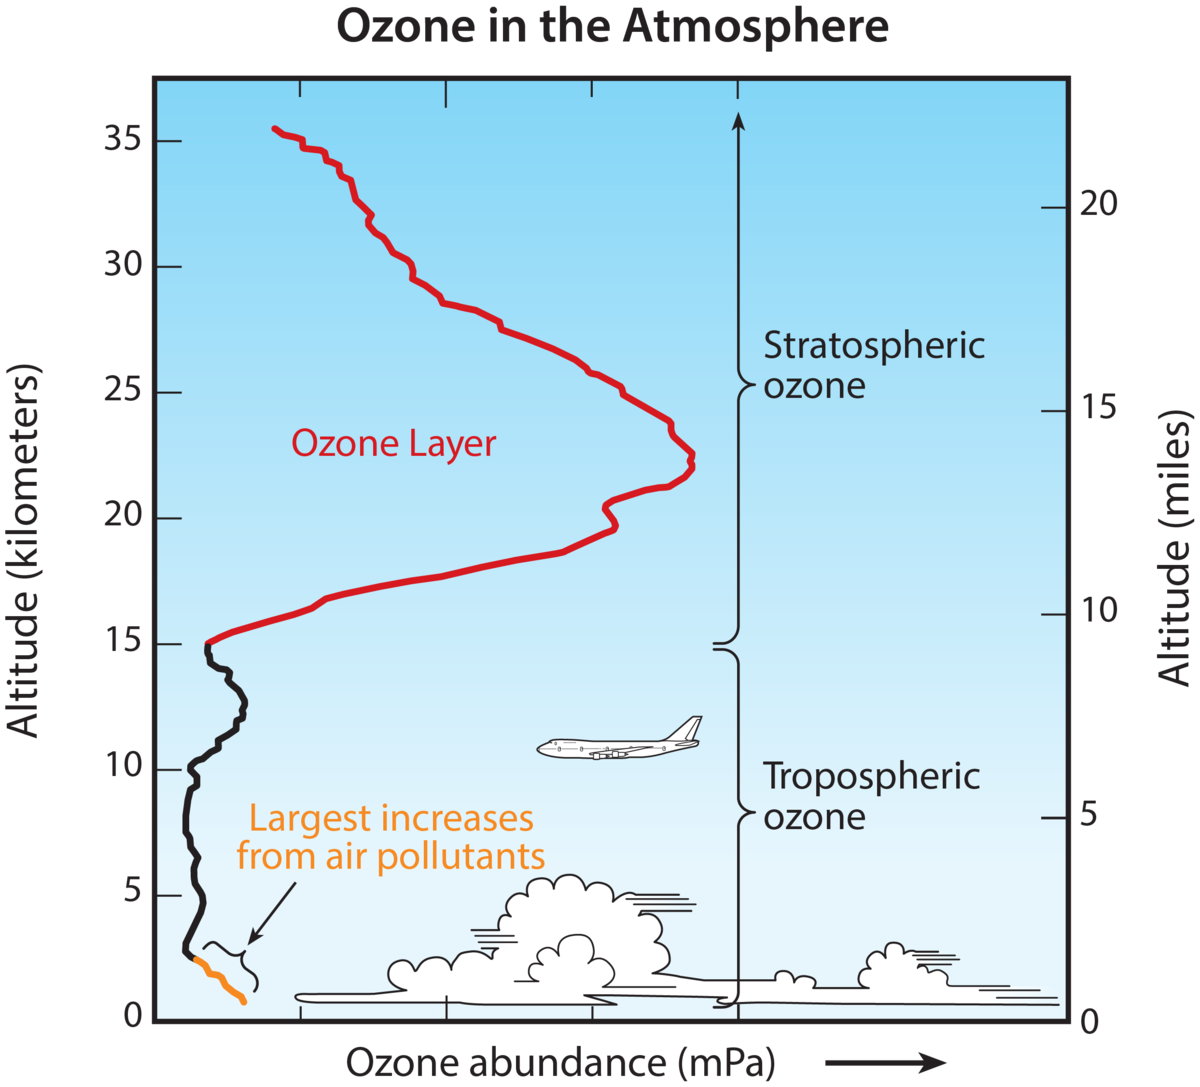 Vertical ozone distribution